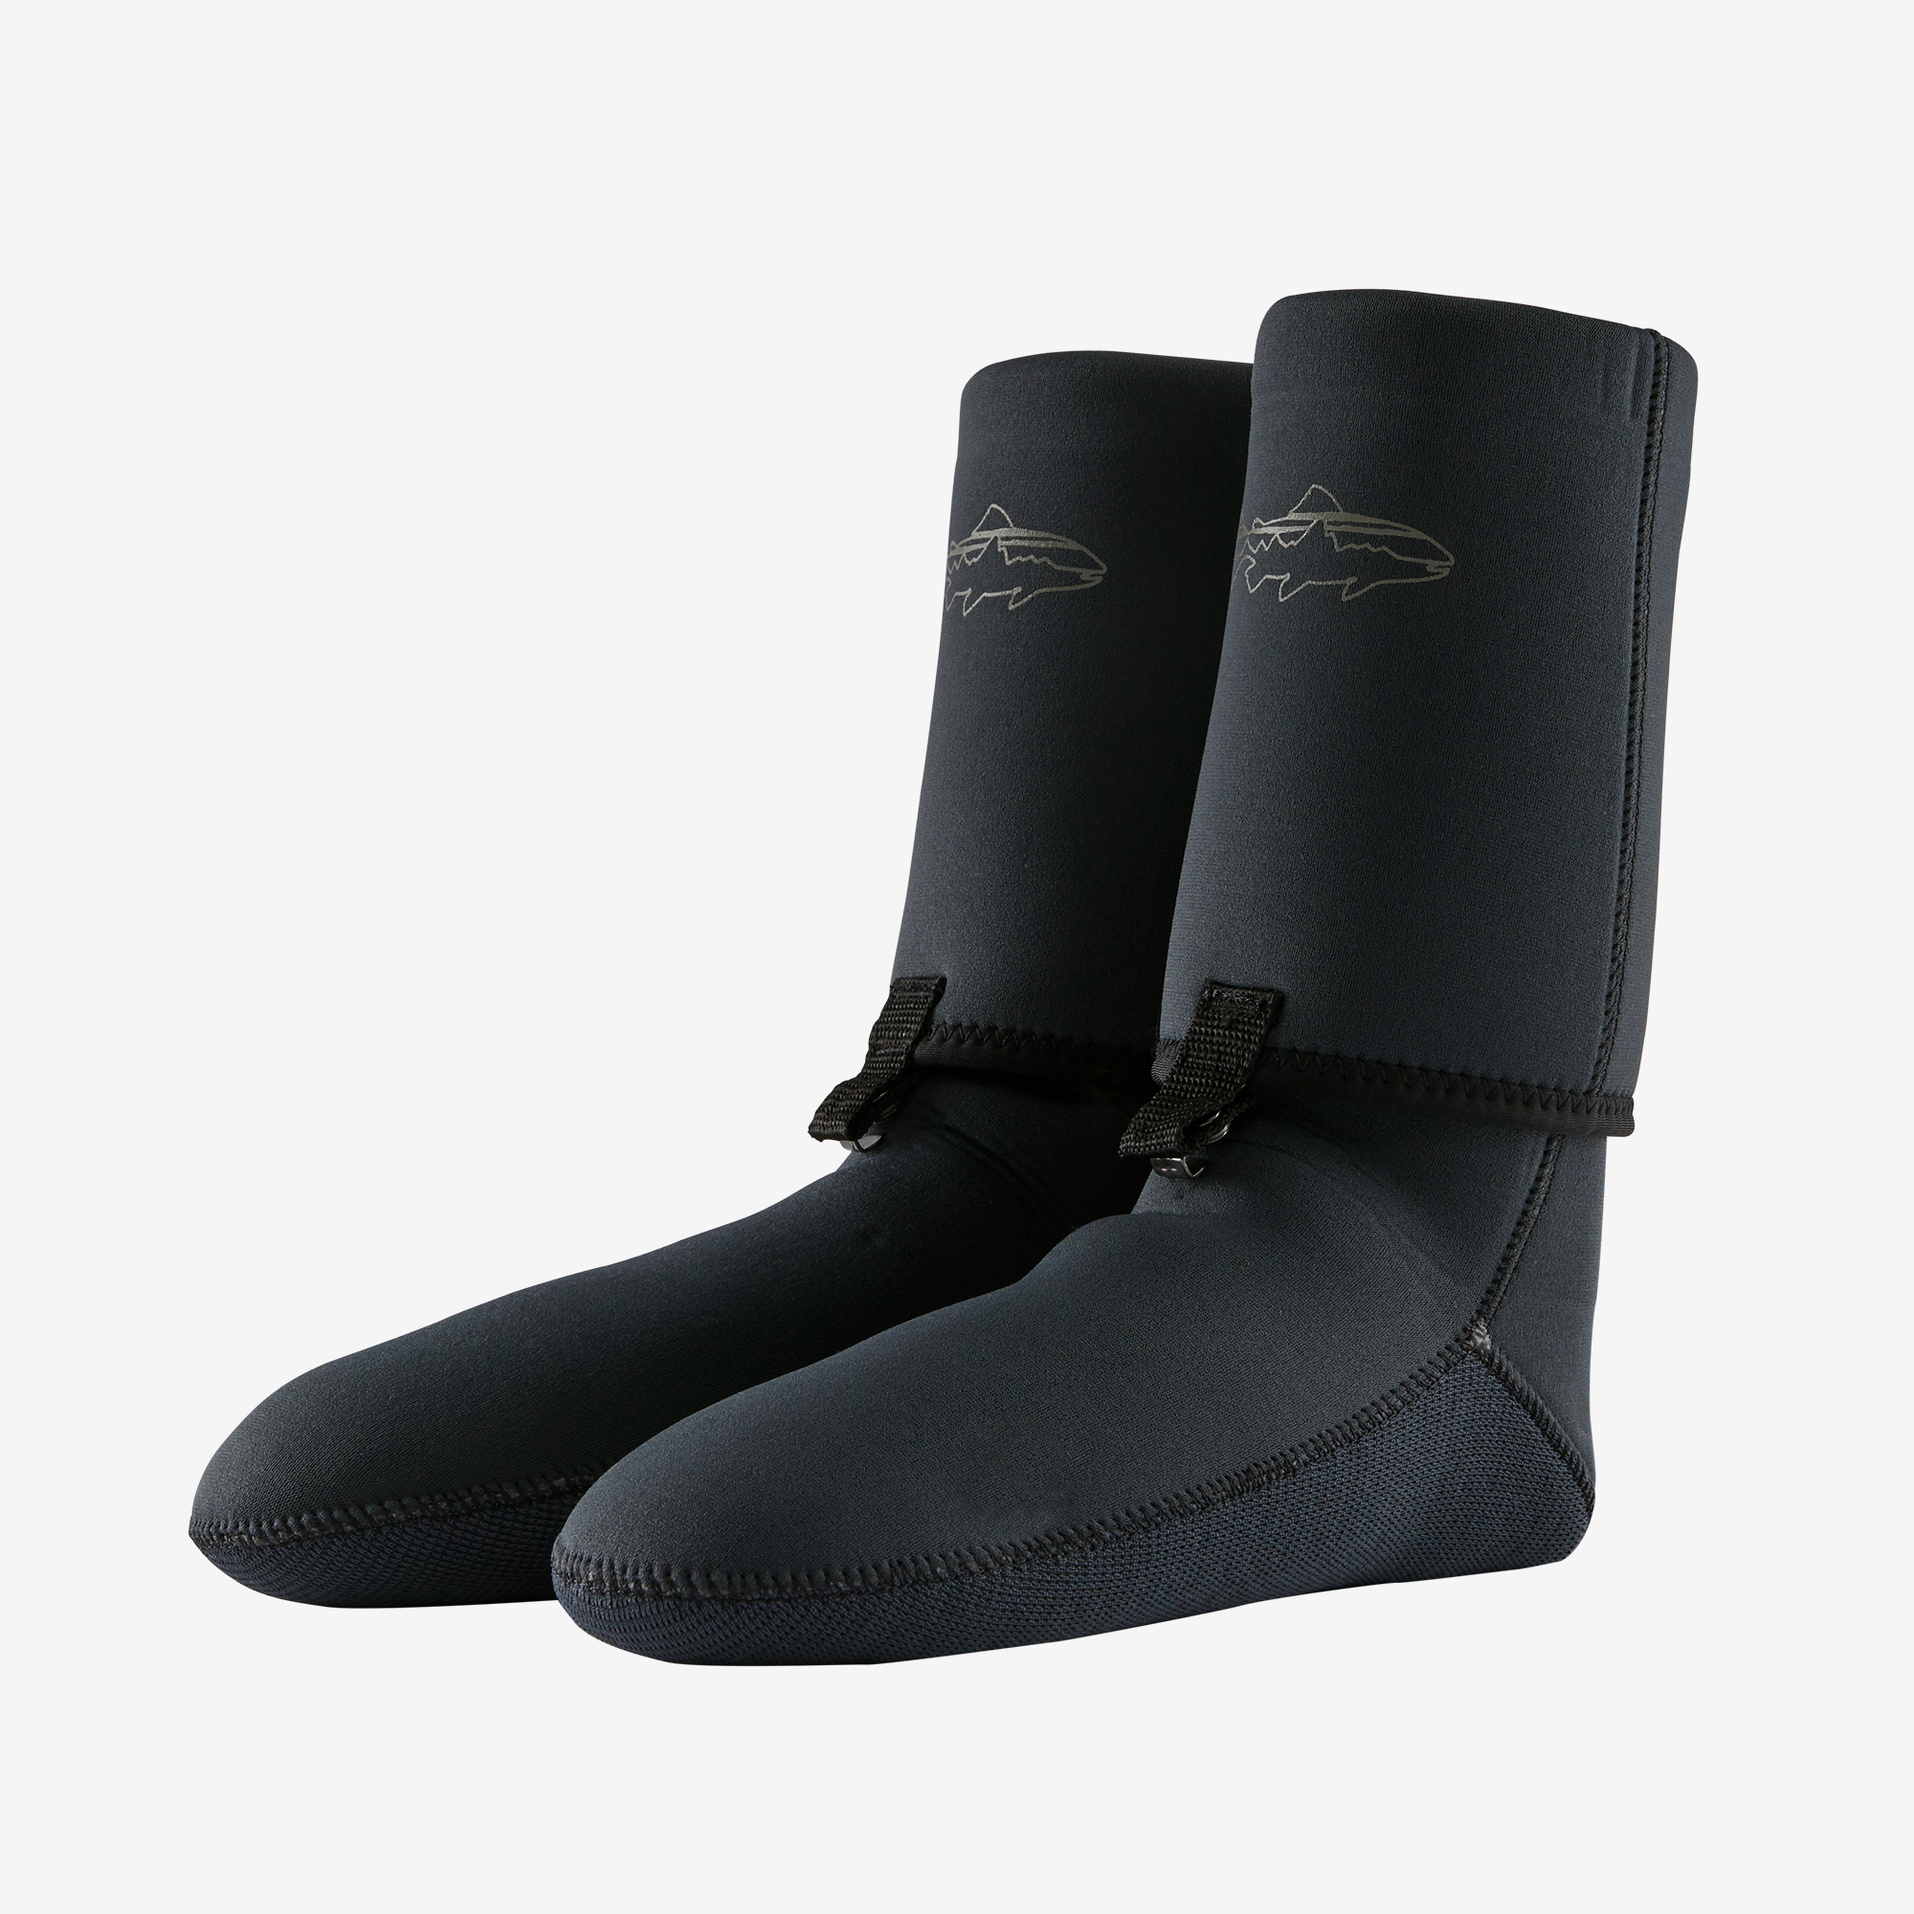 Patagonia Yulex Wading Socks w/ Gravel Guards - Black - XL